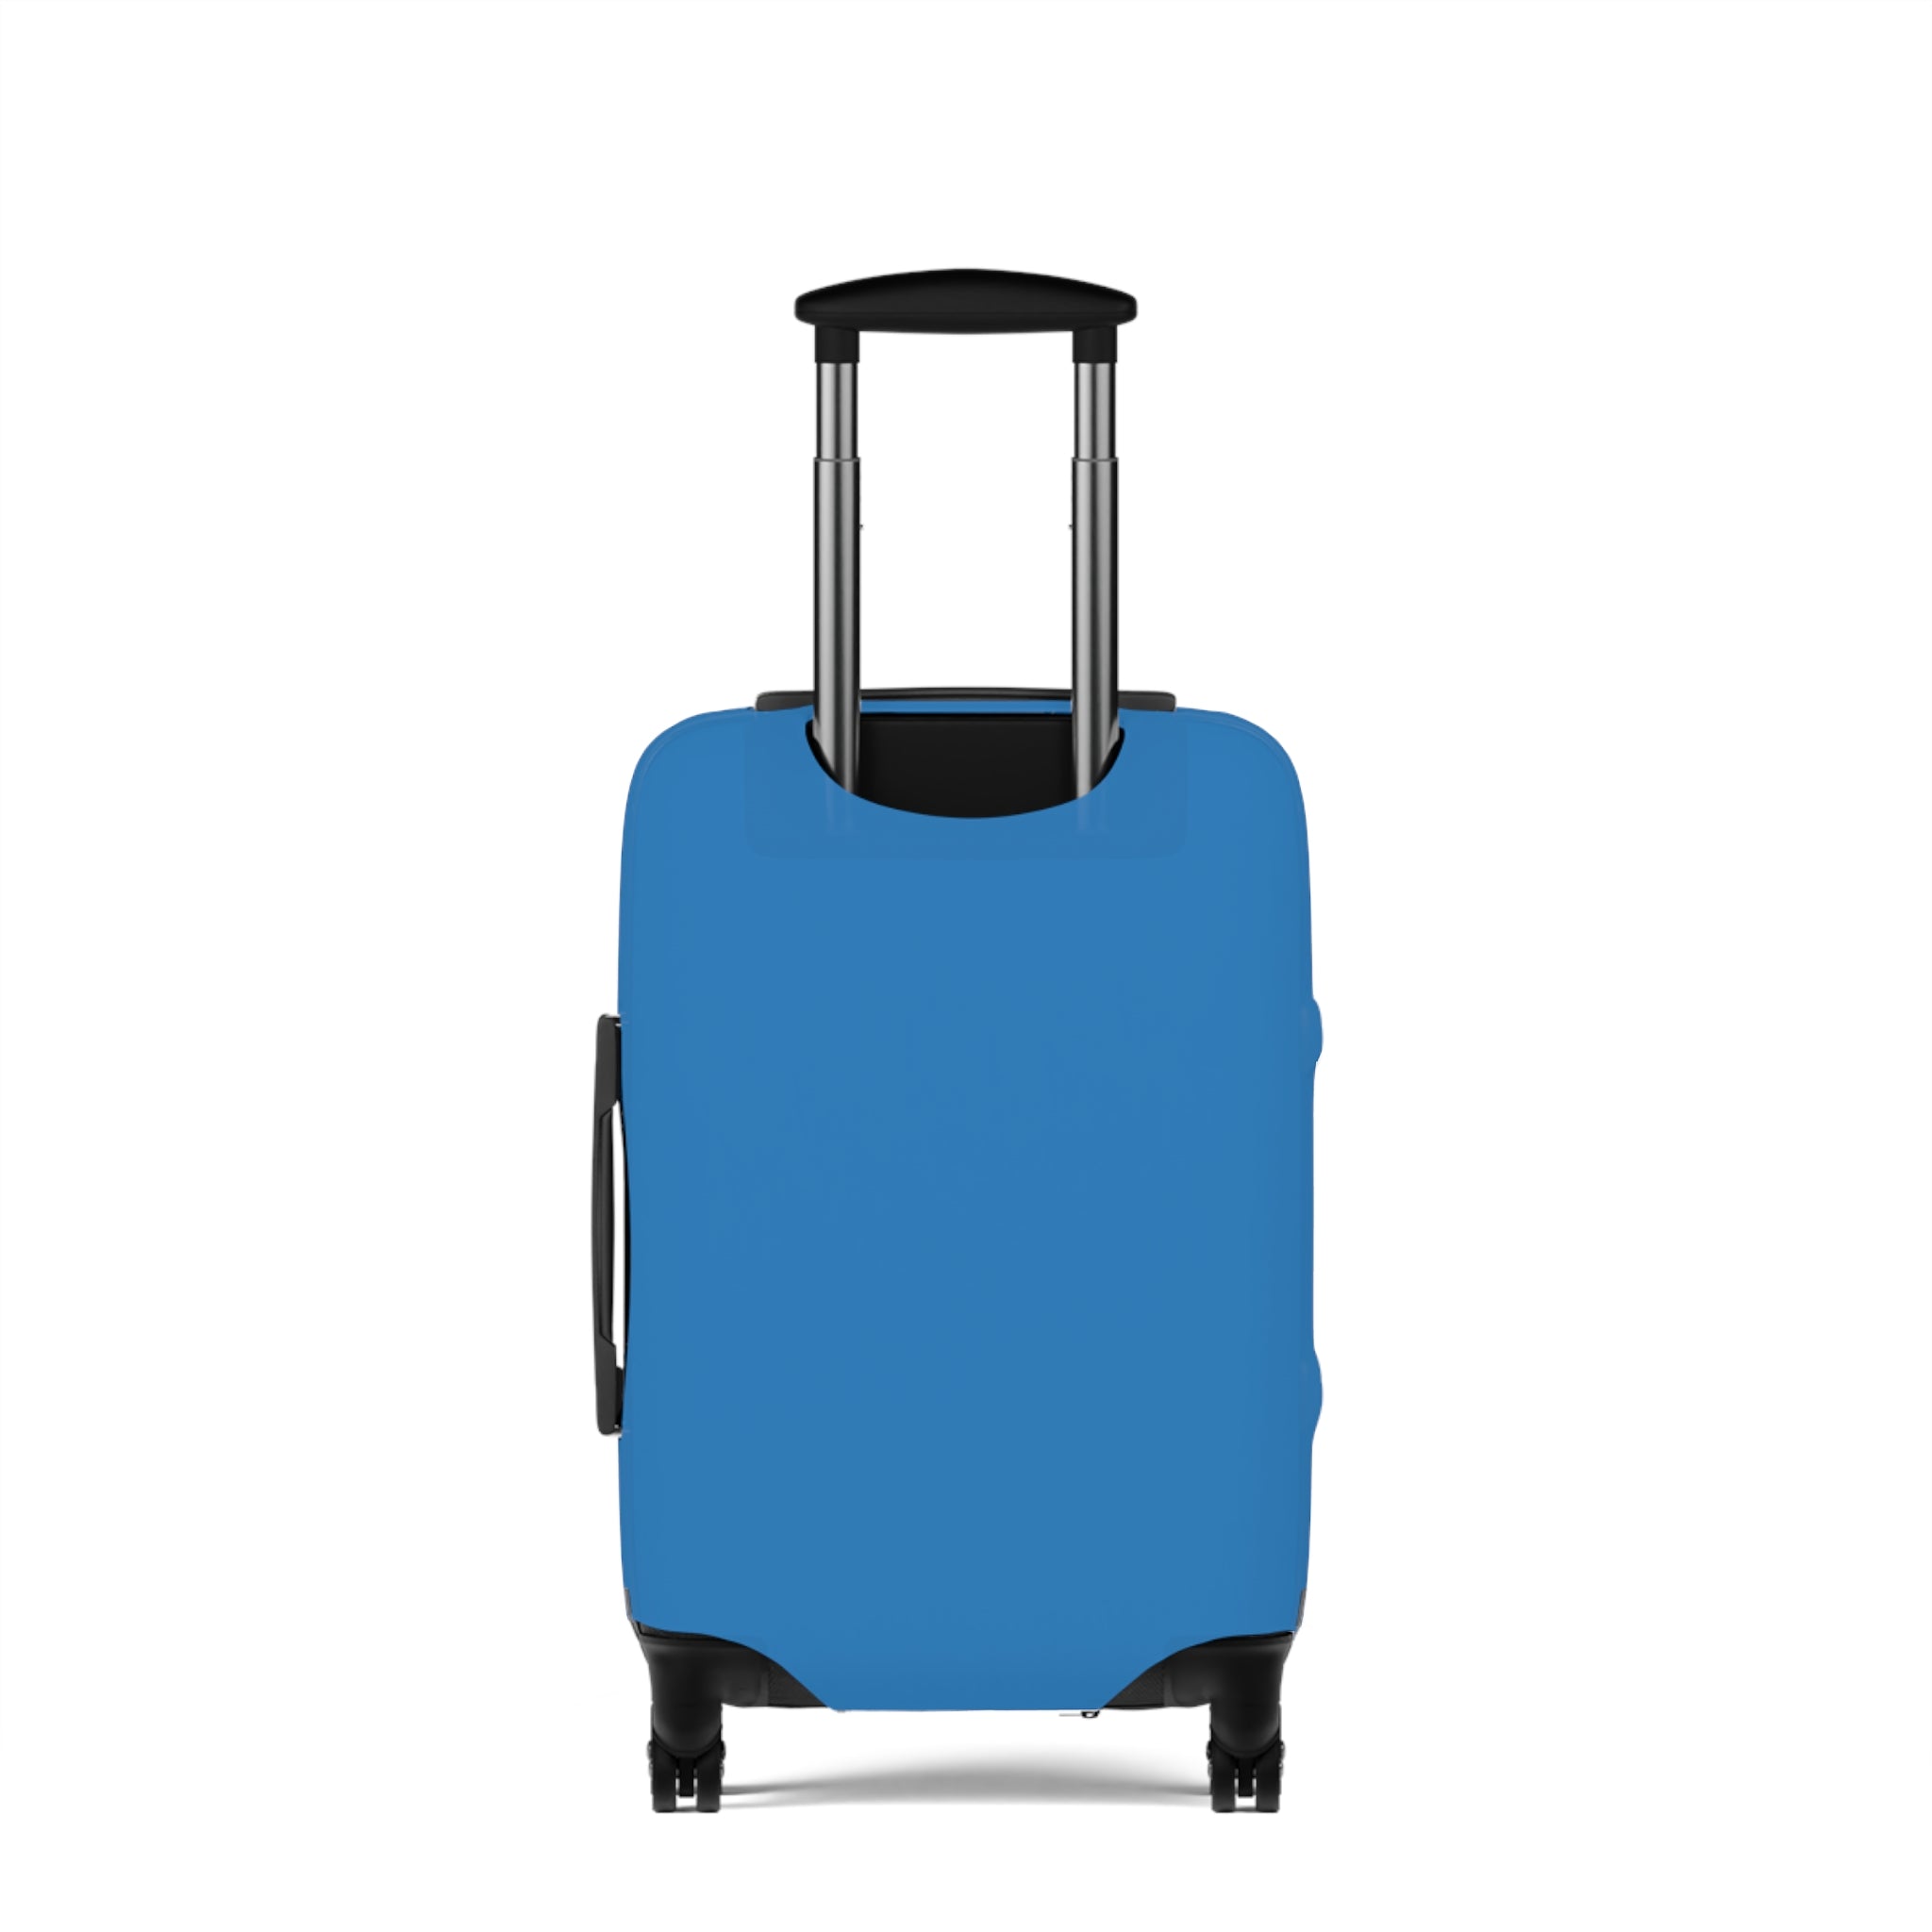 Work hard travel harder Luggage Cover (Blue)